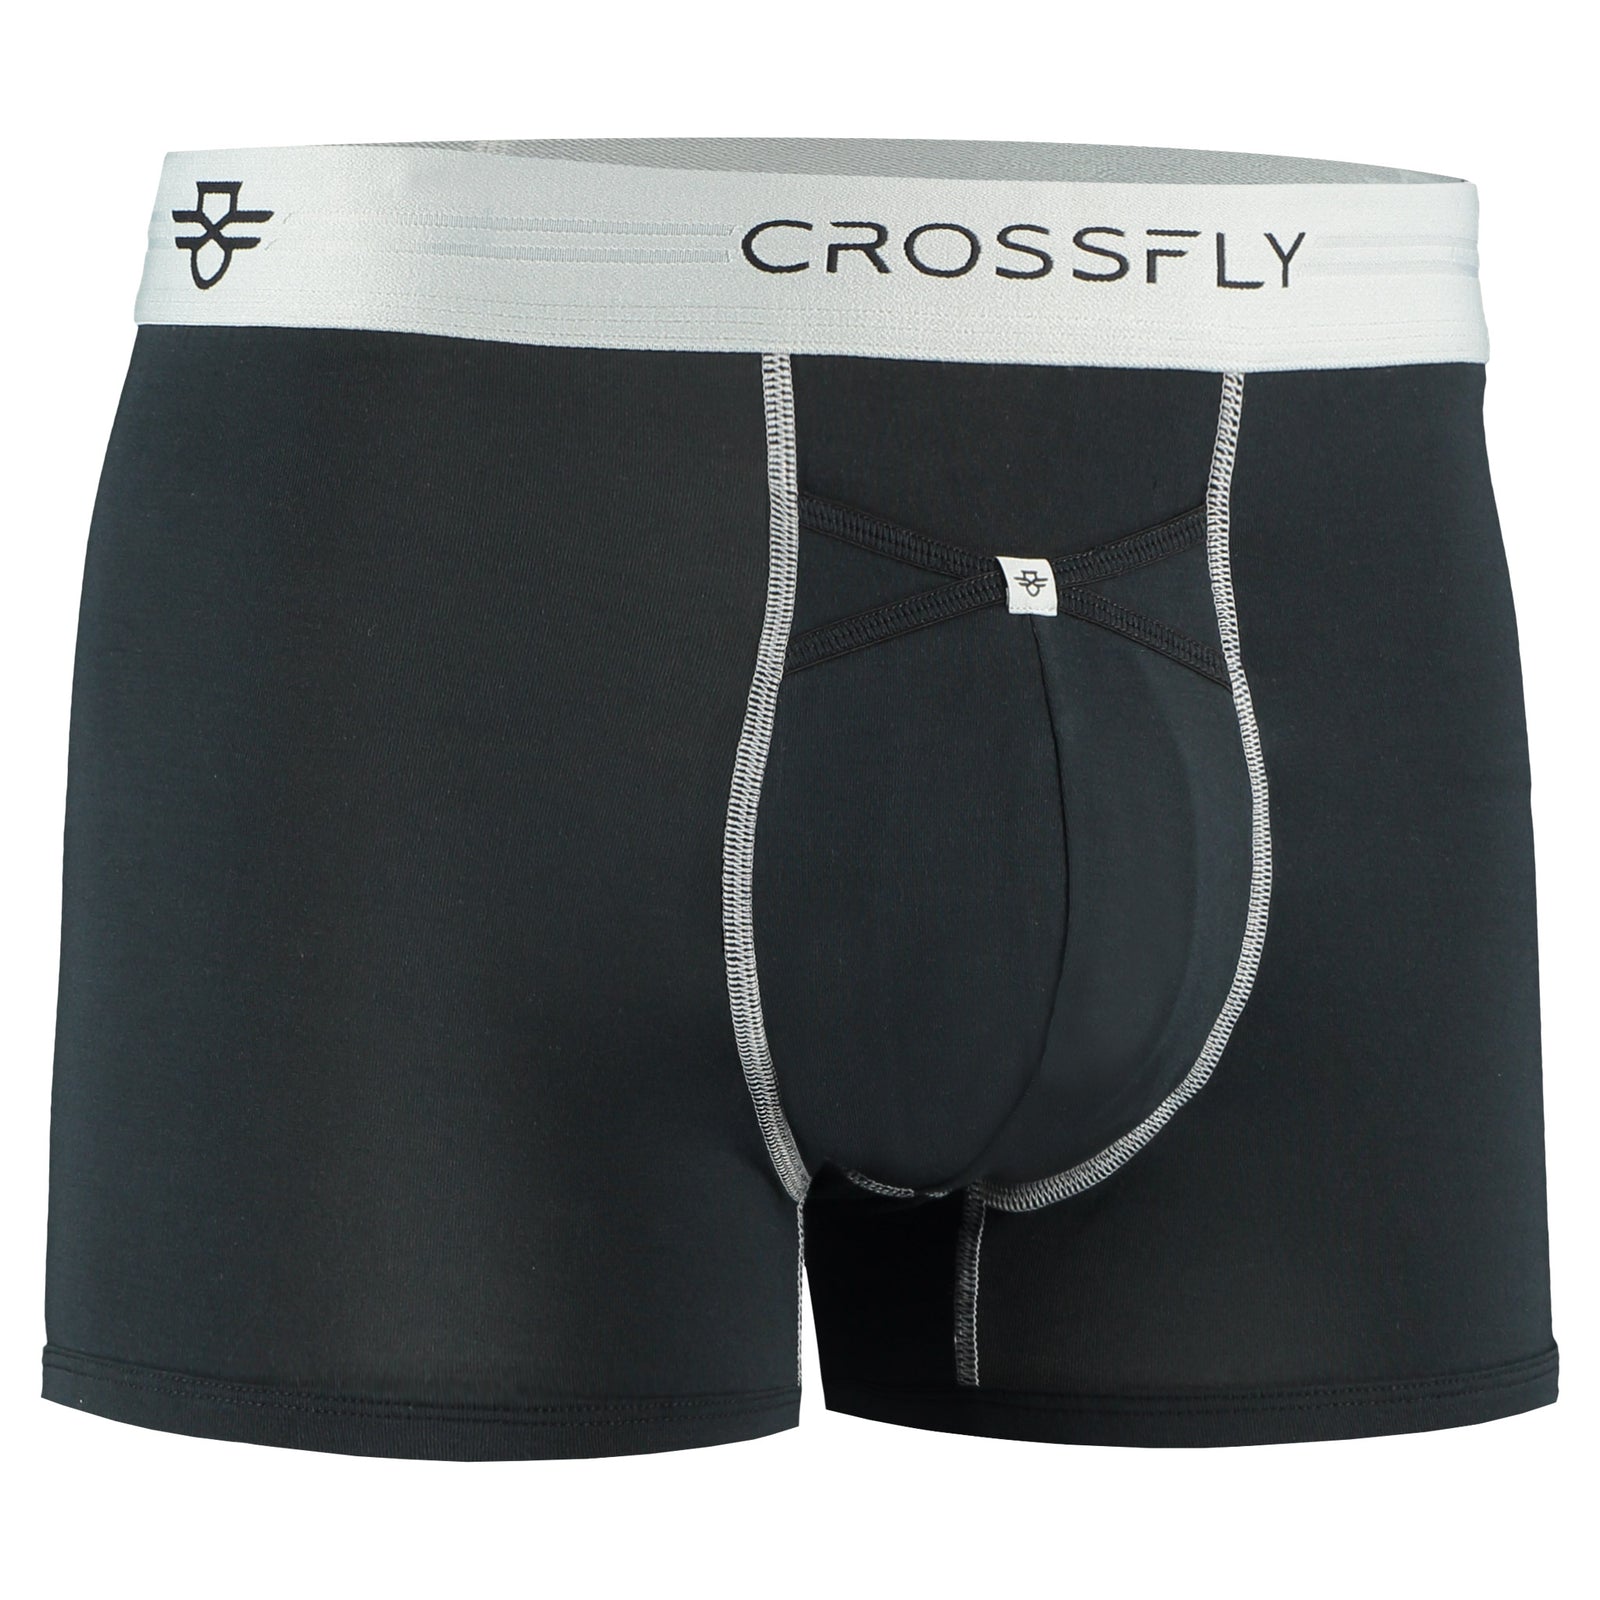 Bestsellers Tagged testicle support underwear - Crossfly